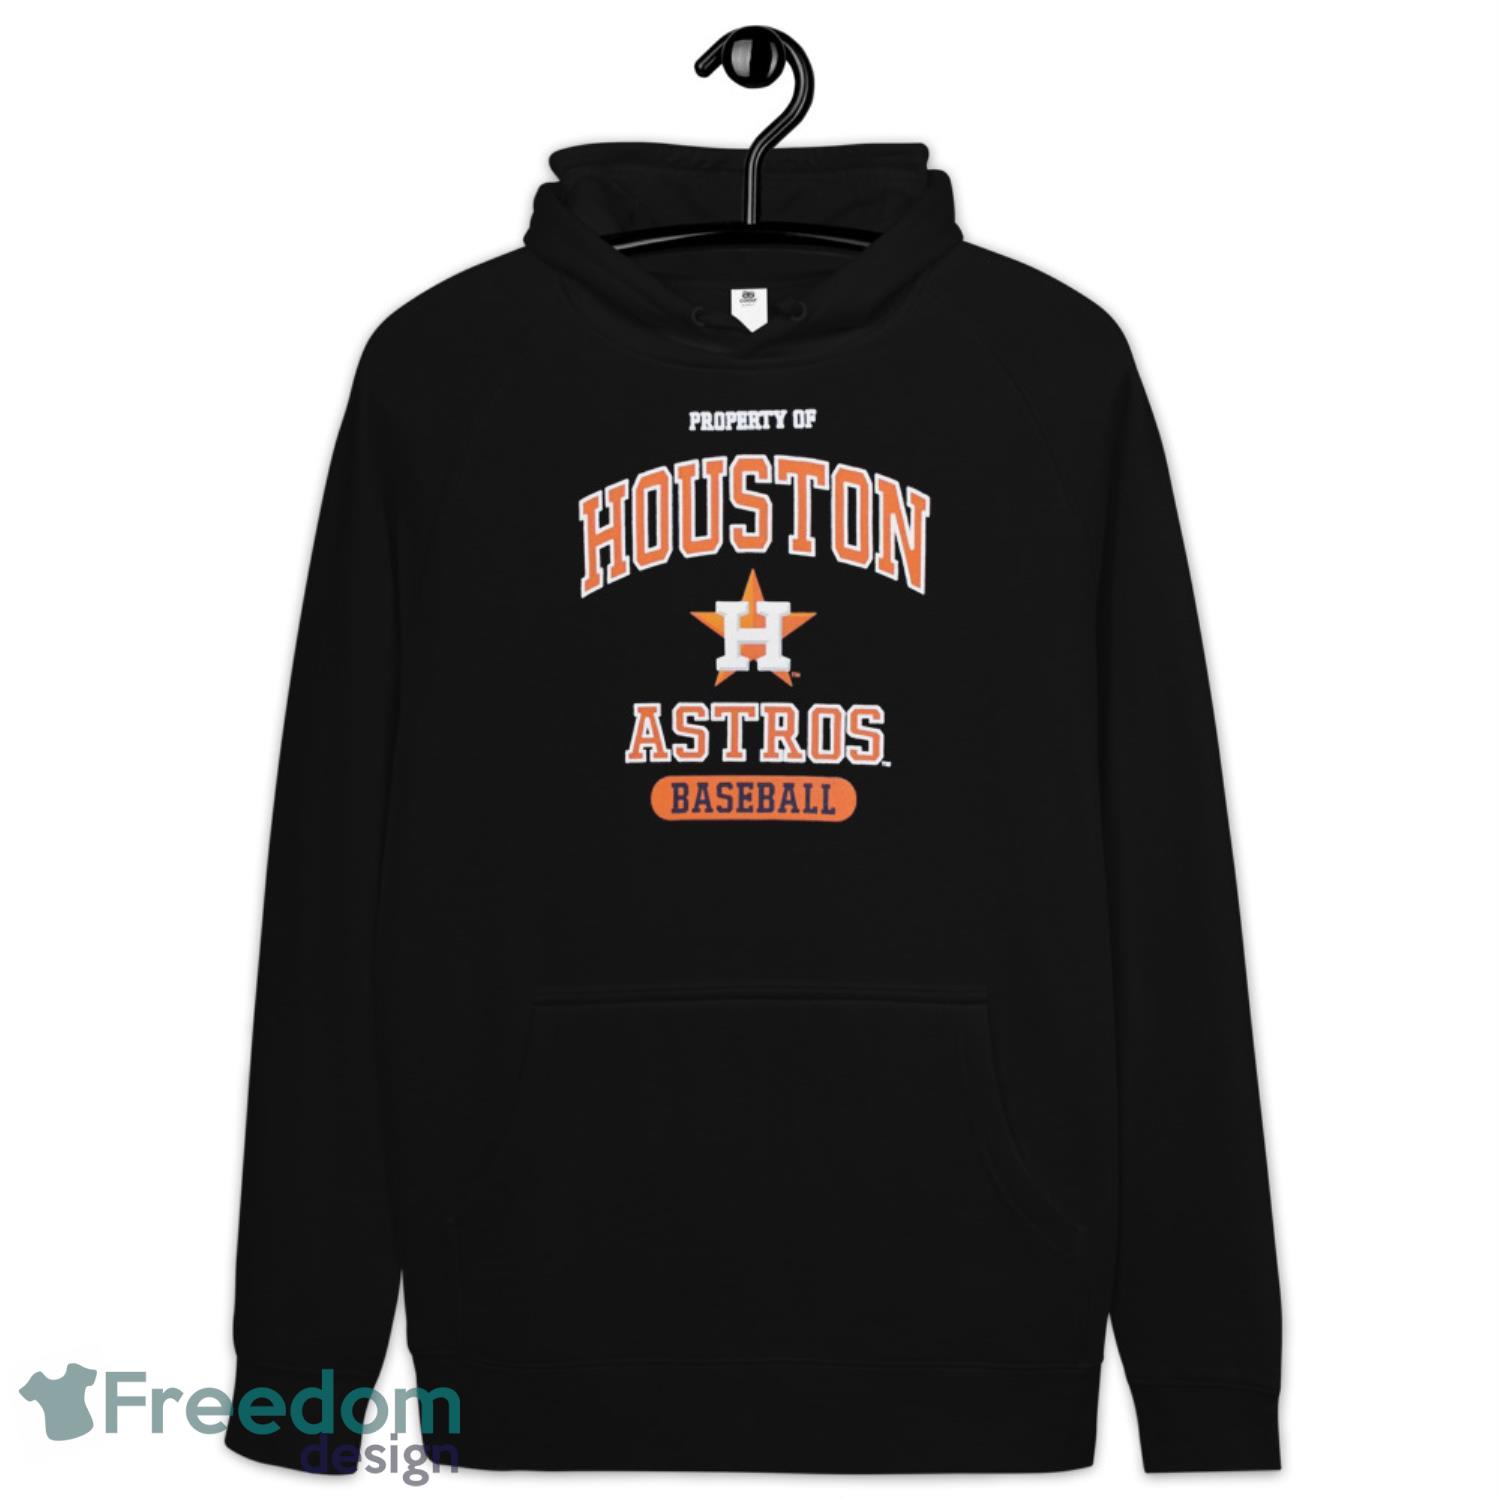 Property Of Houston Astros Baseball T Shirt Gift For Fans